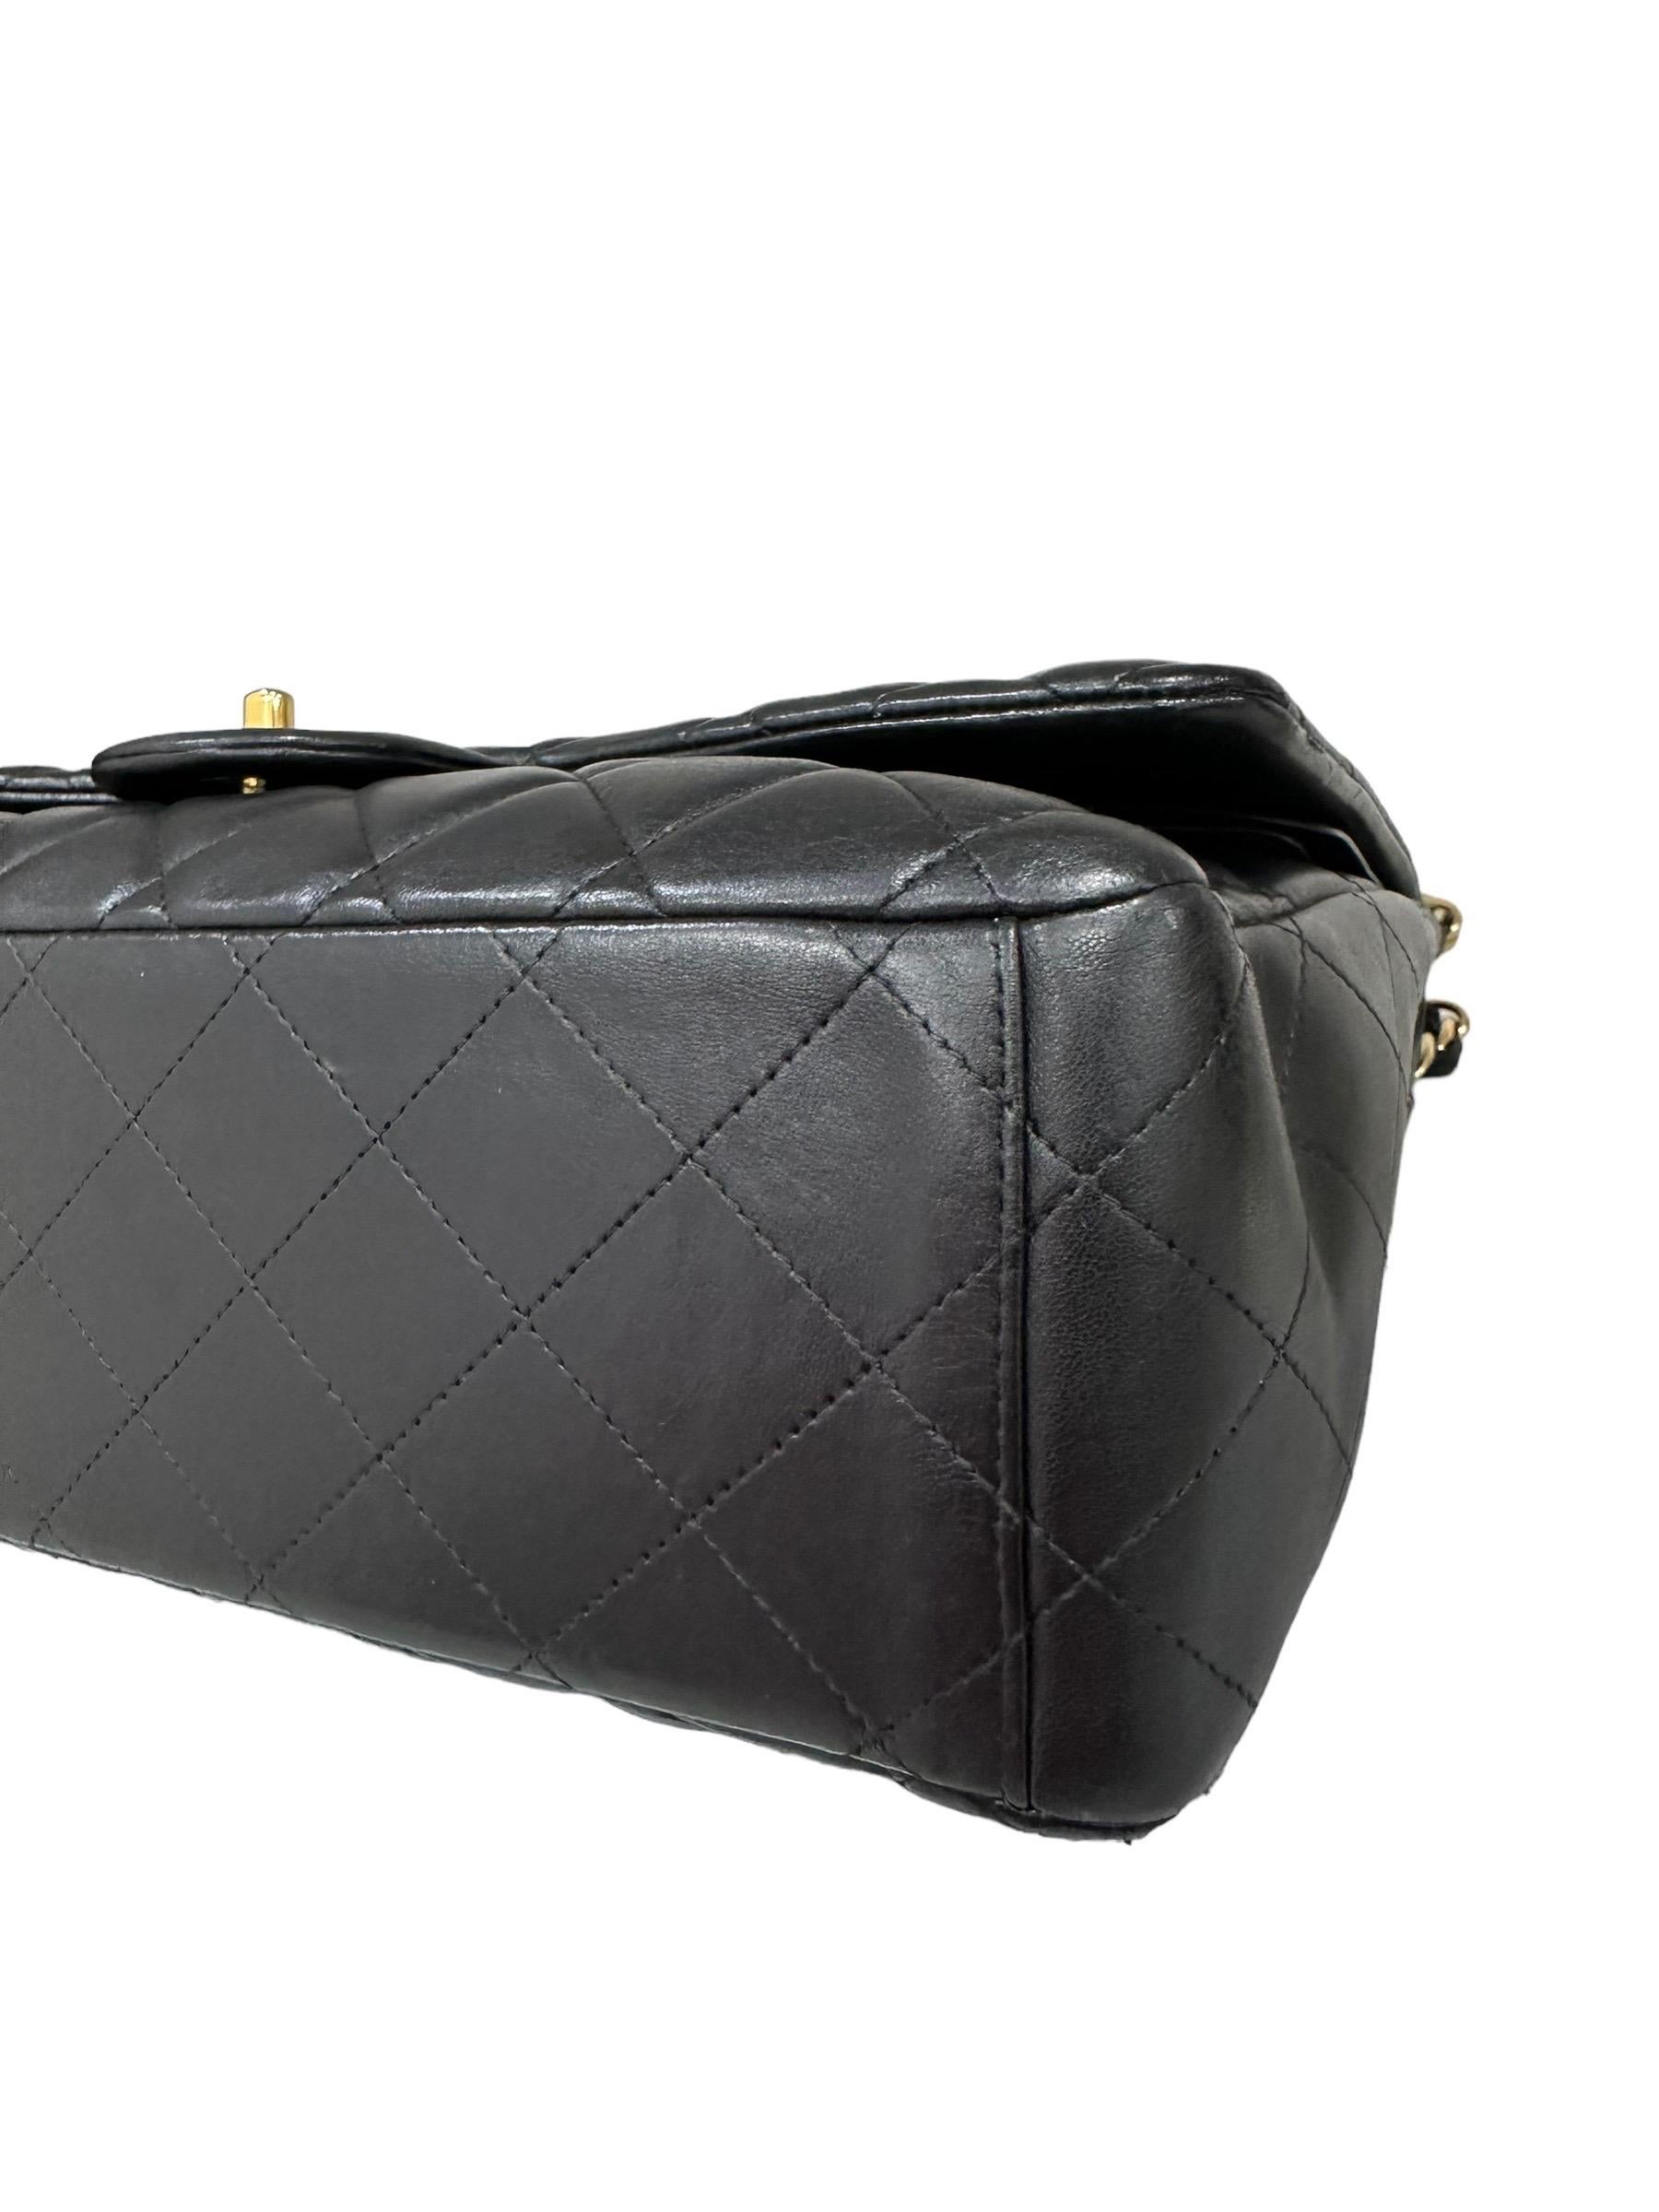 2011 Chanel Timeless Maxi Jumbo Black Leather Top Shoulder Bag 7